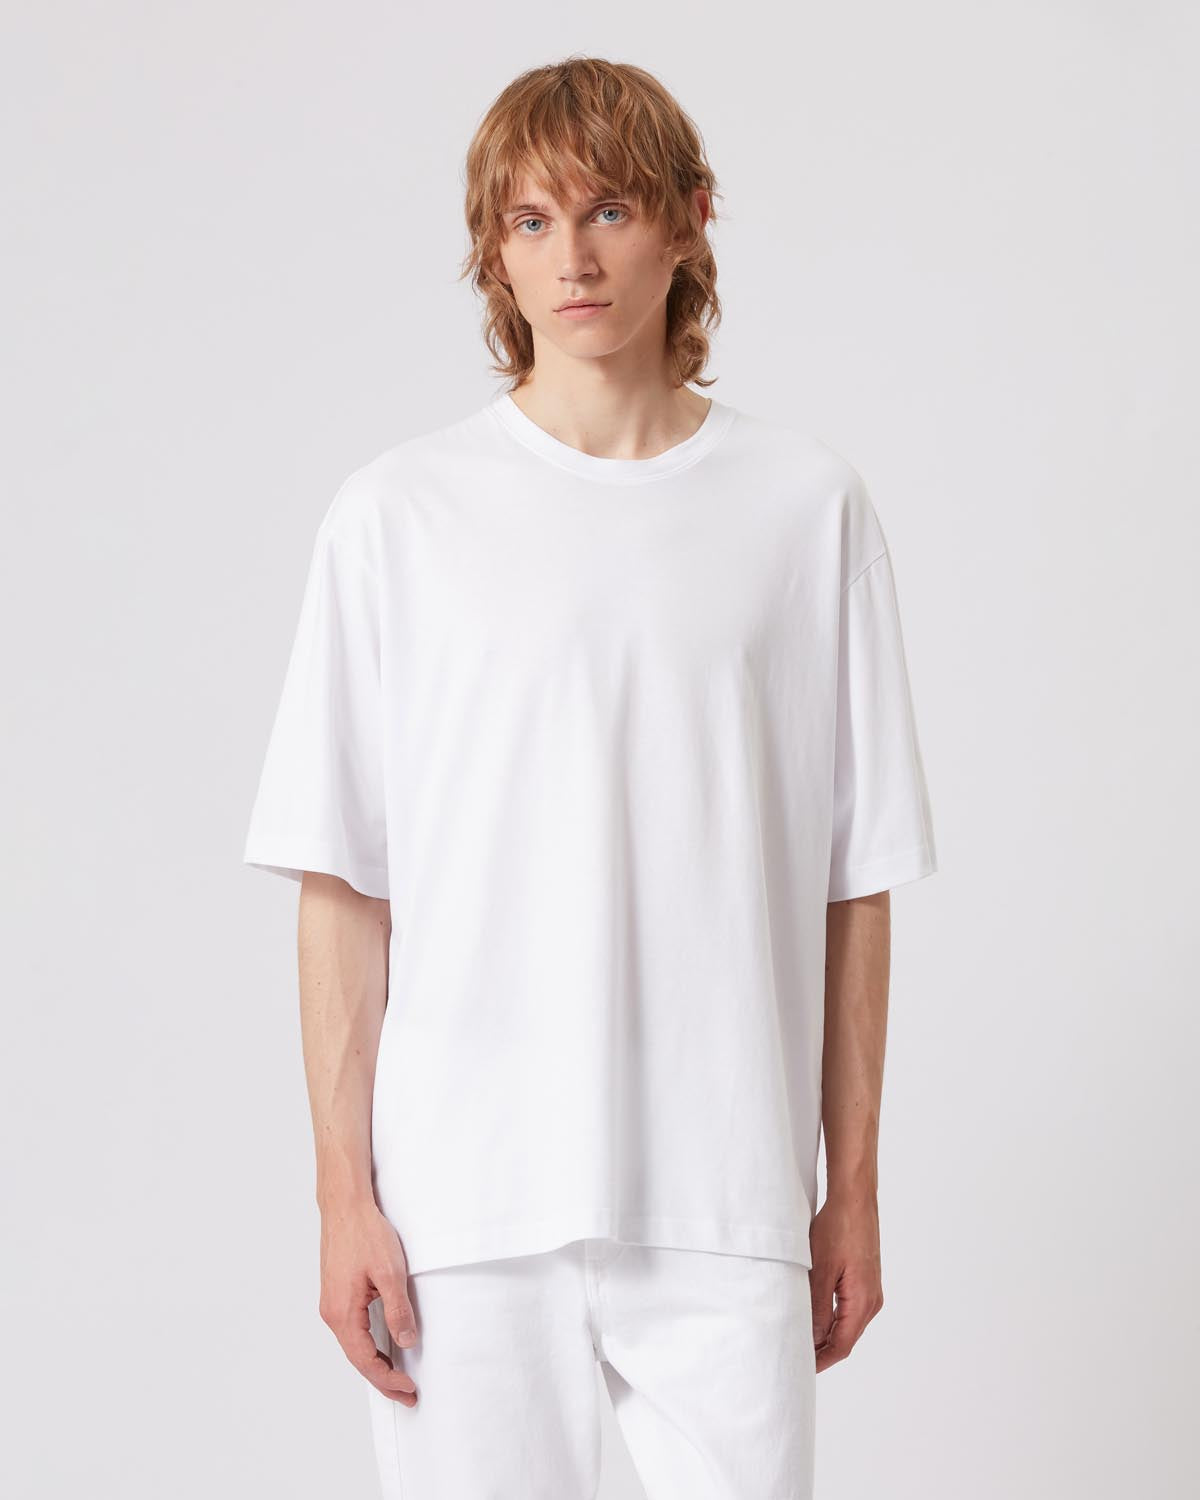 T-shirt guizy „marant“ aus baumwolle Man Weiß 7